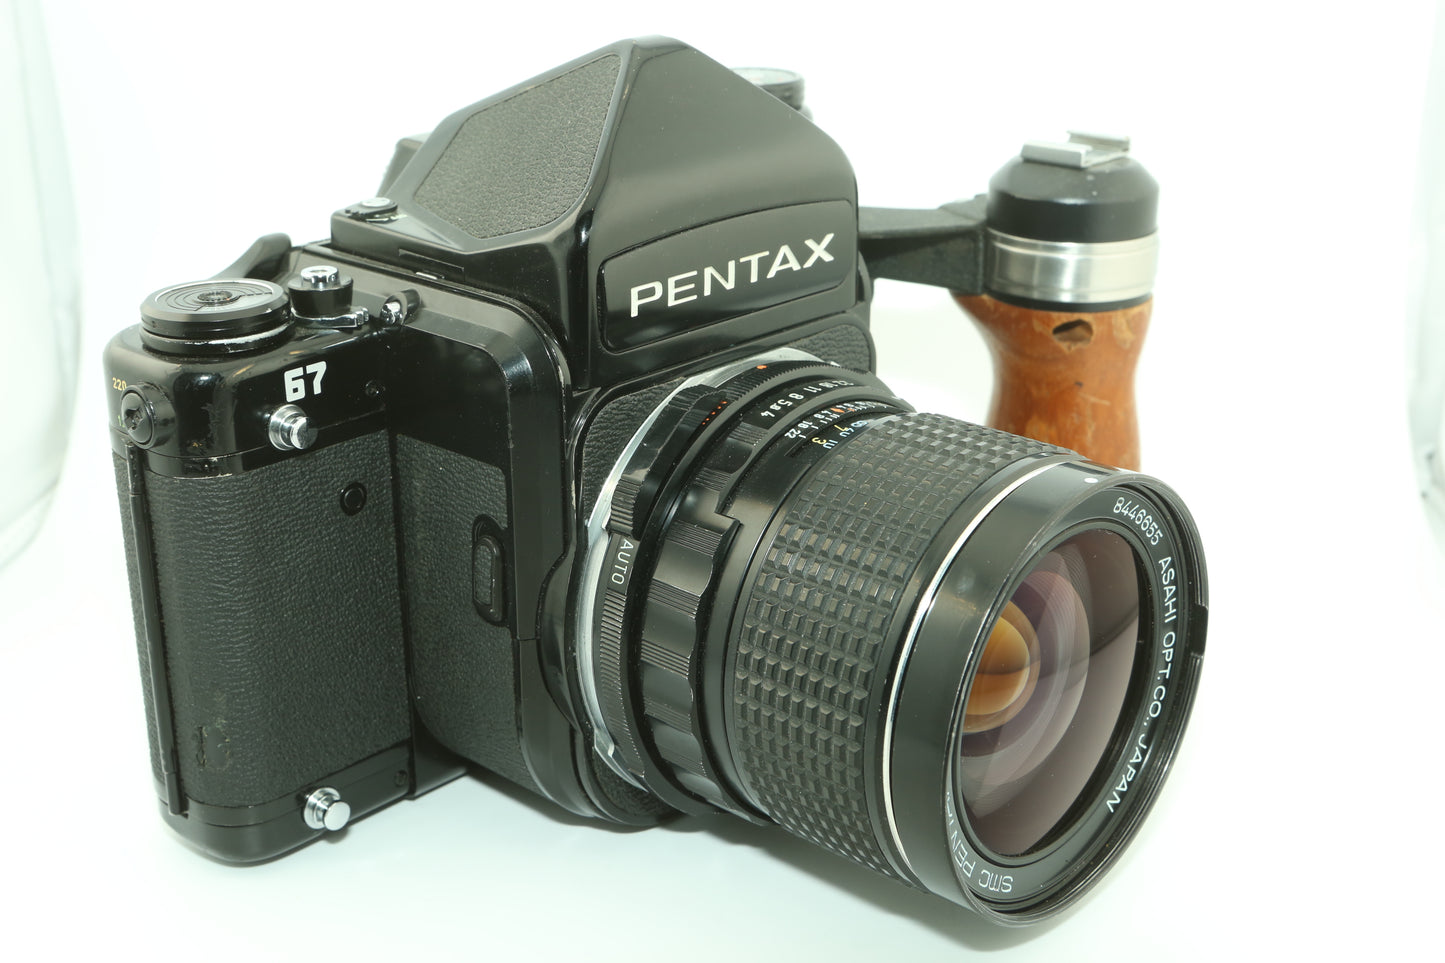 Pentax 67